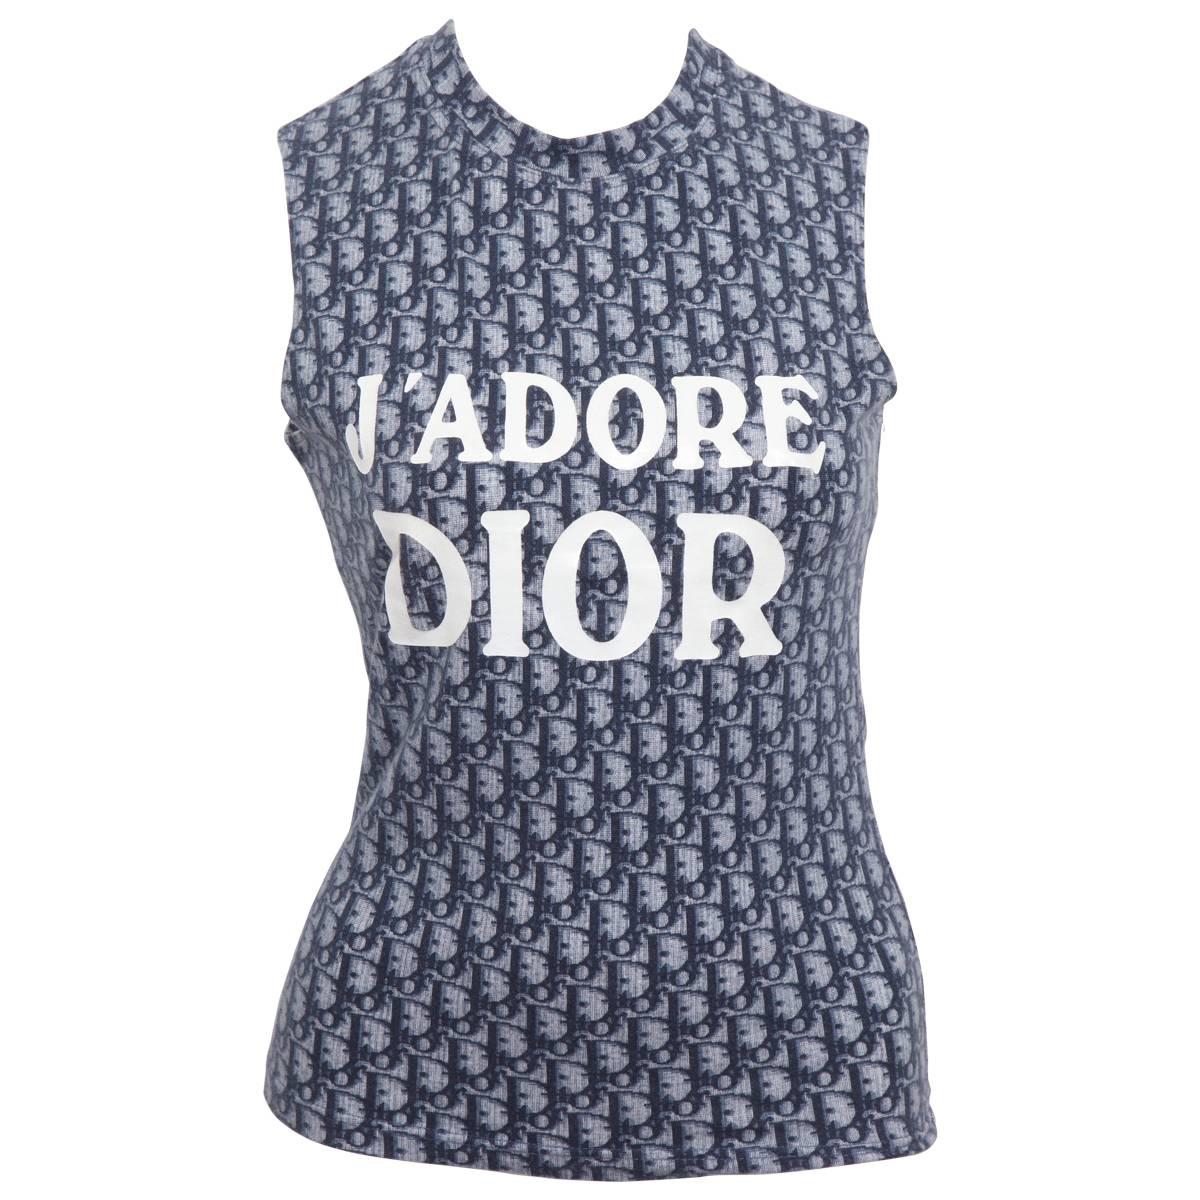 John Galliano for Christian Dior Trotter Logo T-Shirt